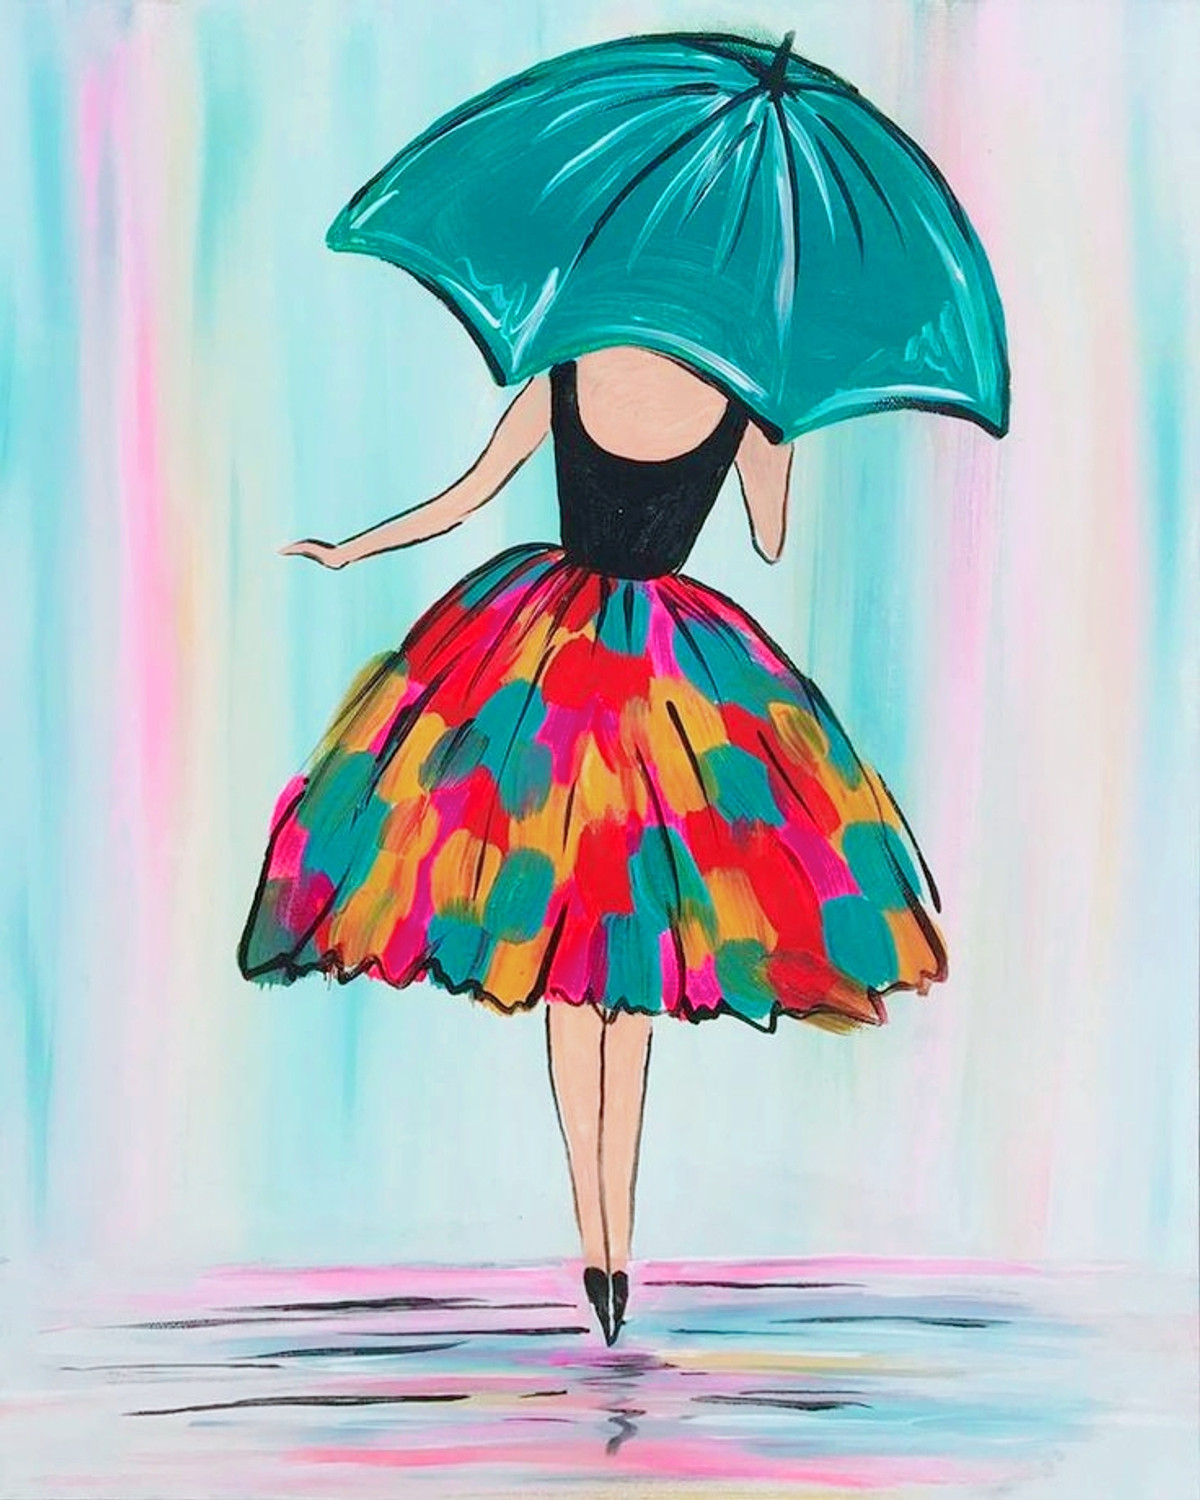 Buy Lady with umbrella Handmade Painting by KRITIKA VERMA. Code